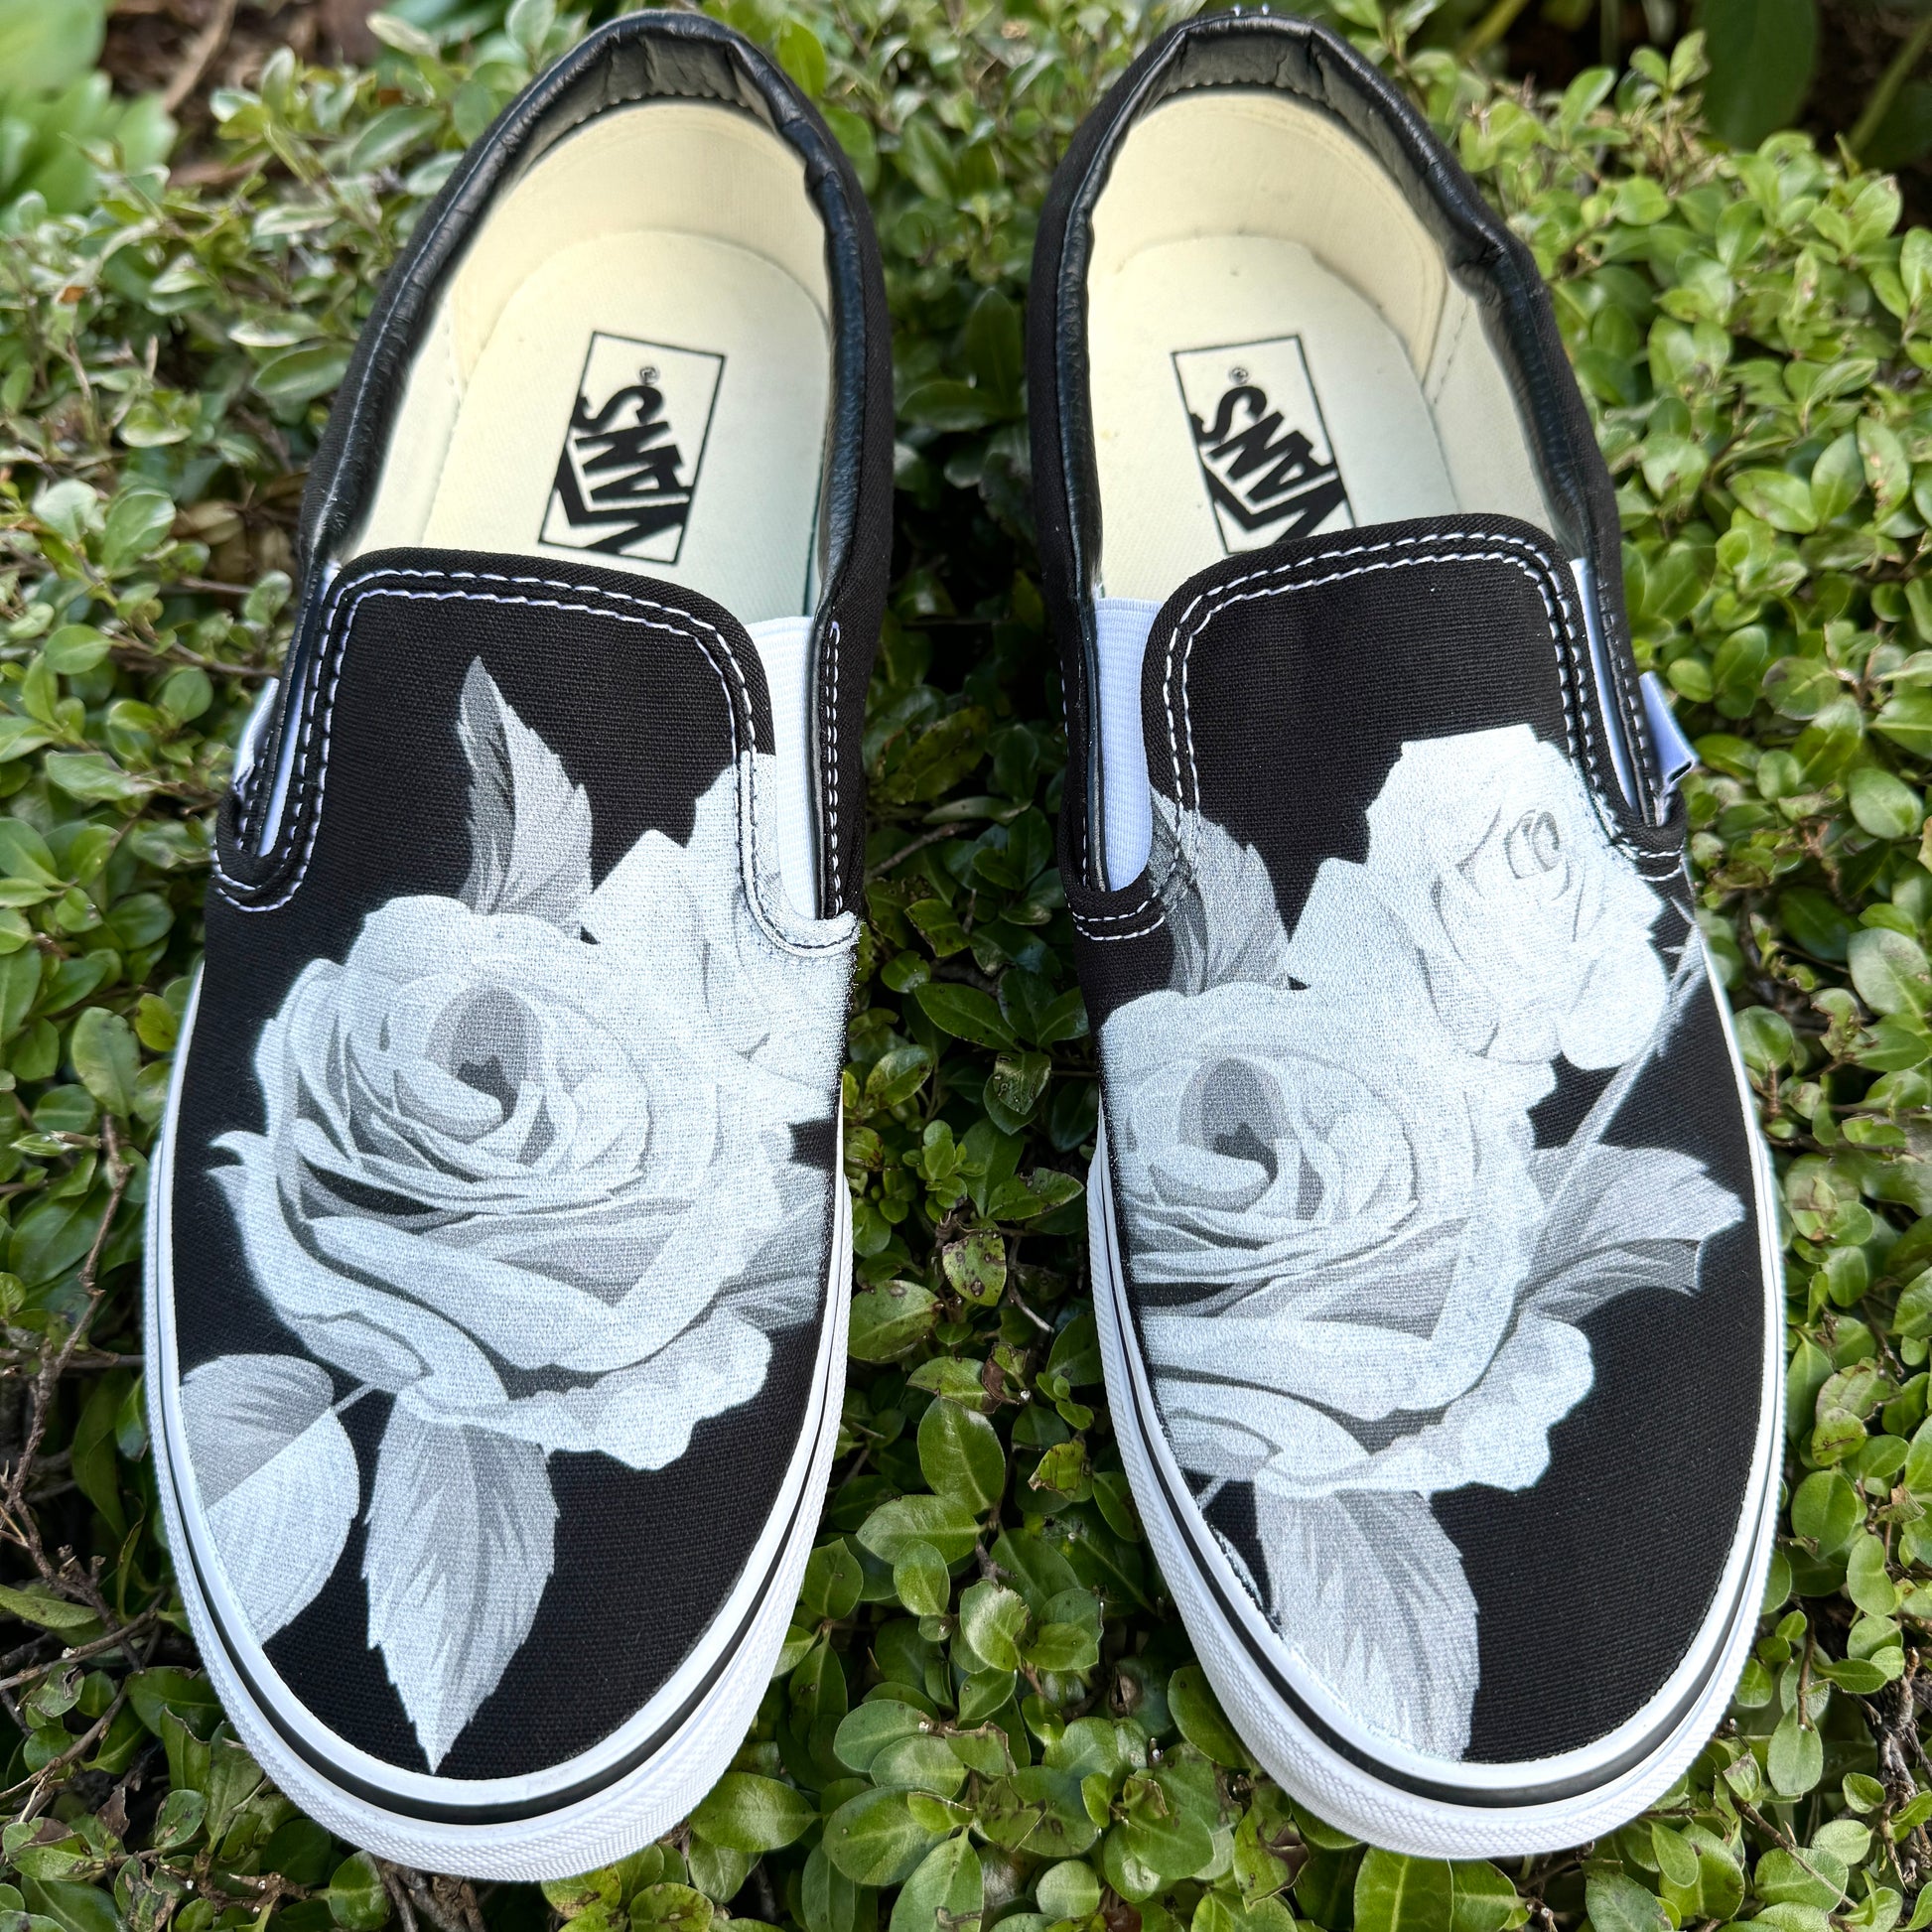 black slip on Vans with roses